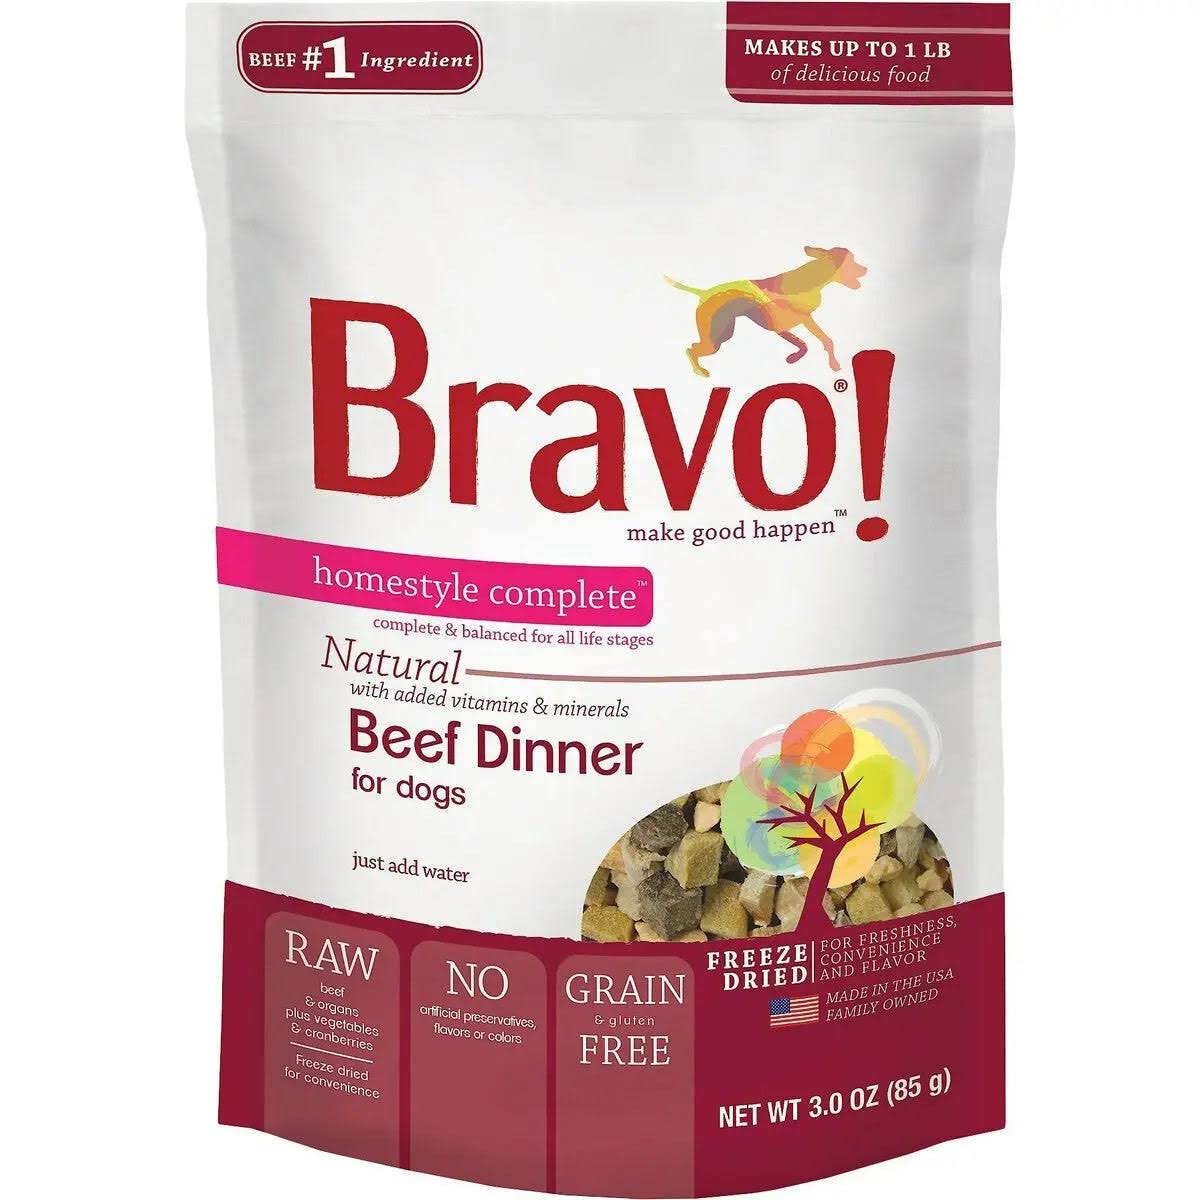 Bravo! Homestyle Complete Dog Food - Beef Dinner, 3oz